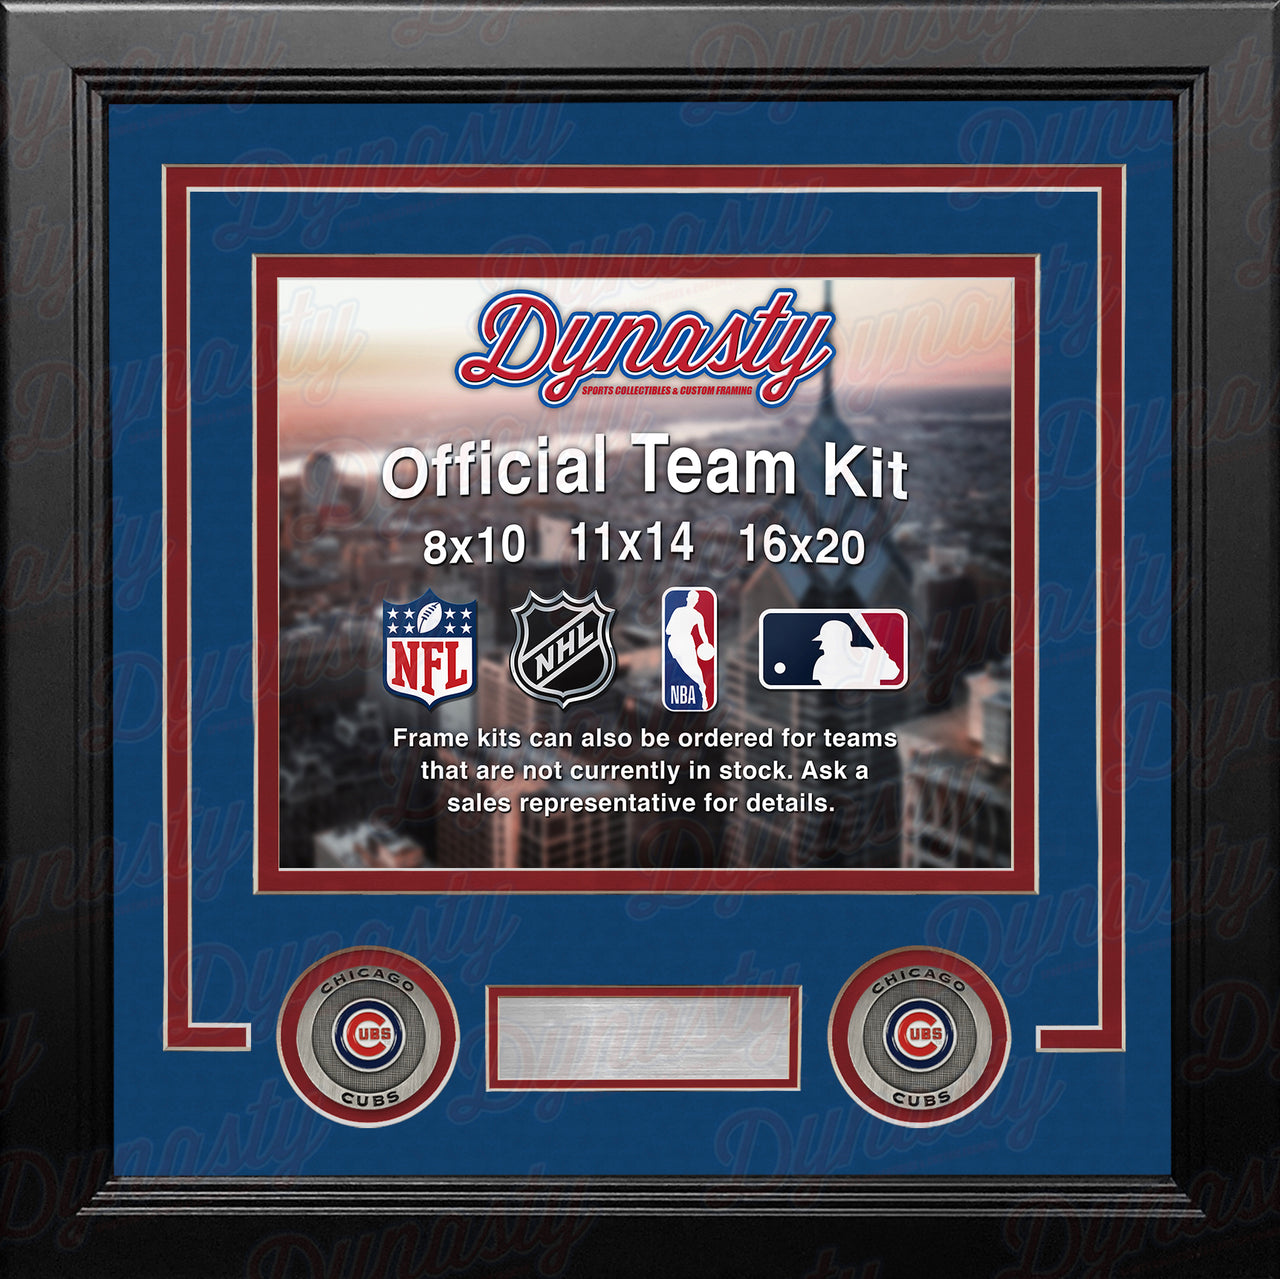 MLB Baseball Photo Picture Frame Kit - Chicago Cubs (Blue Matting, Red Trim) - Dynasty Sports & Framing 